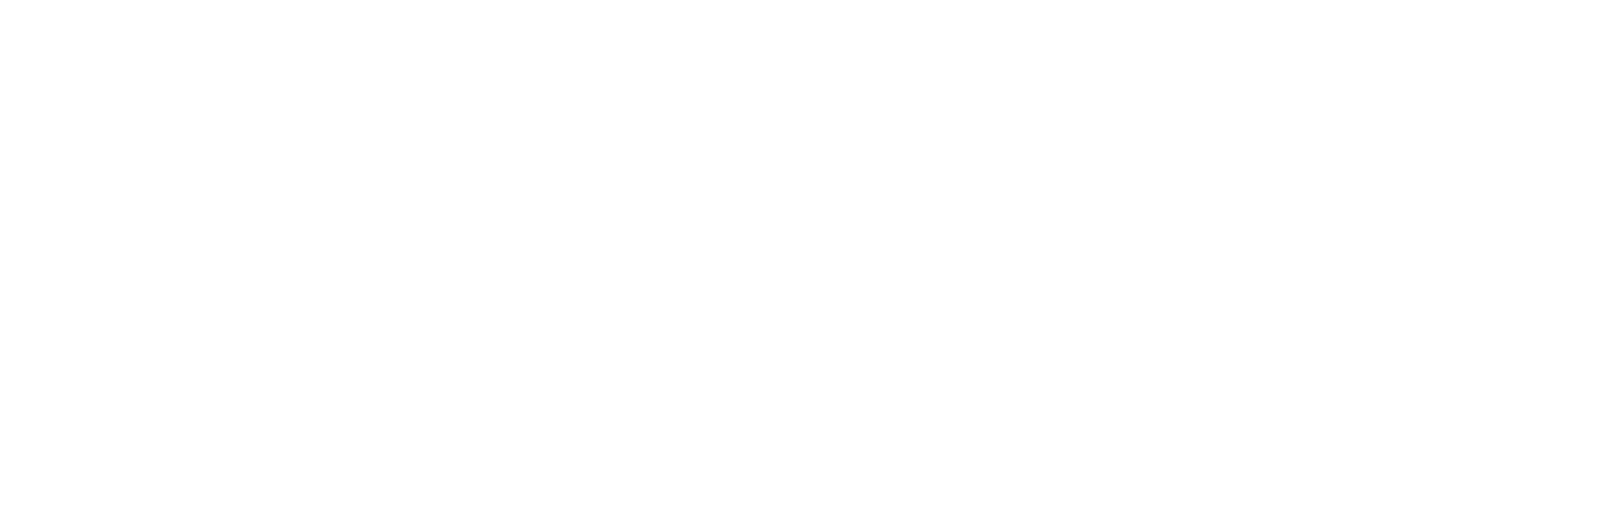 Awaji Island's underwater world
淡路島の海中散歩